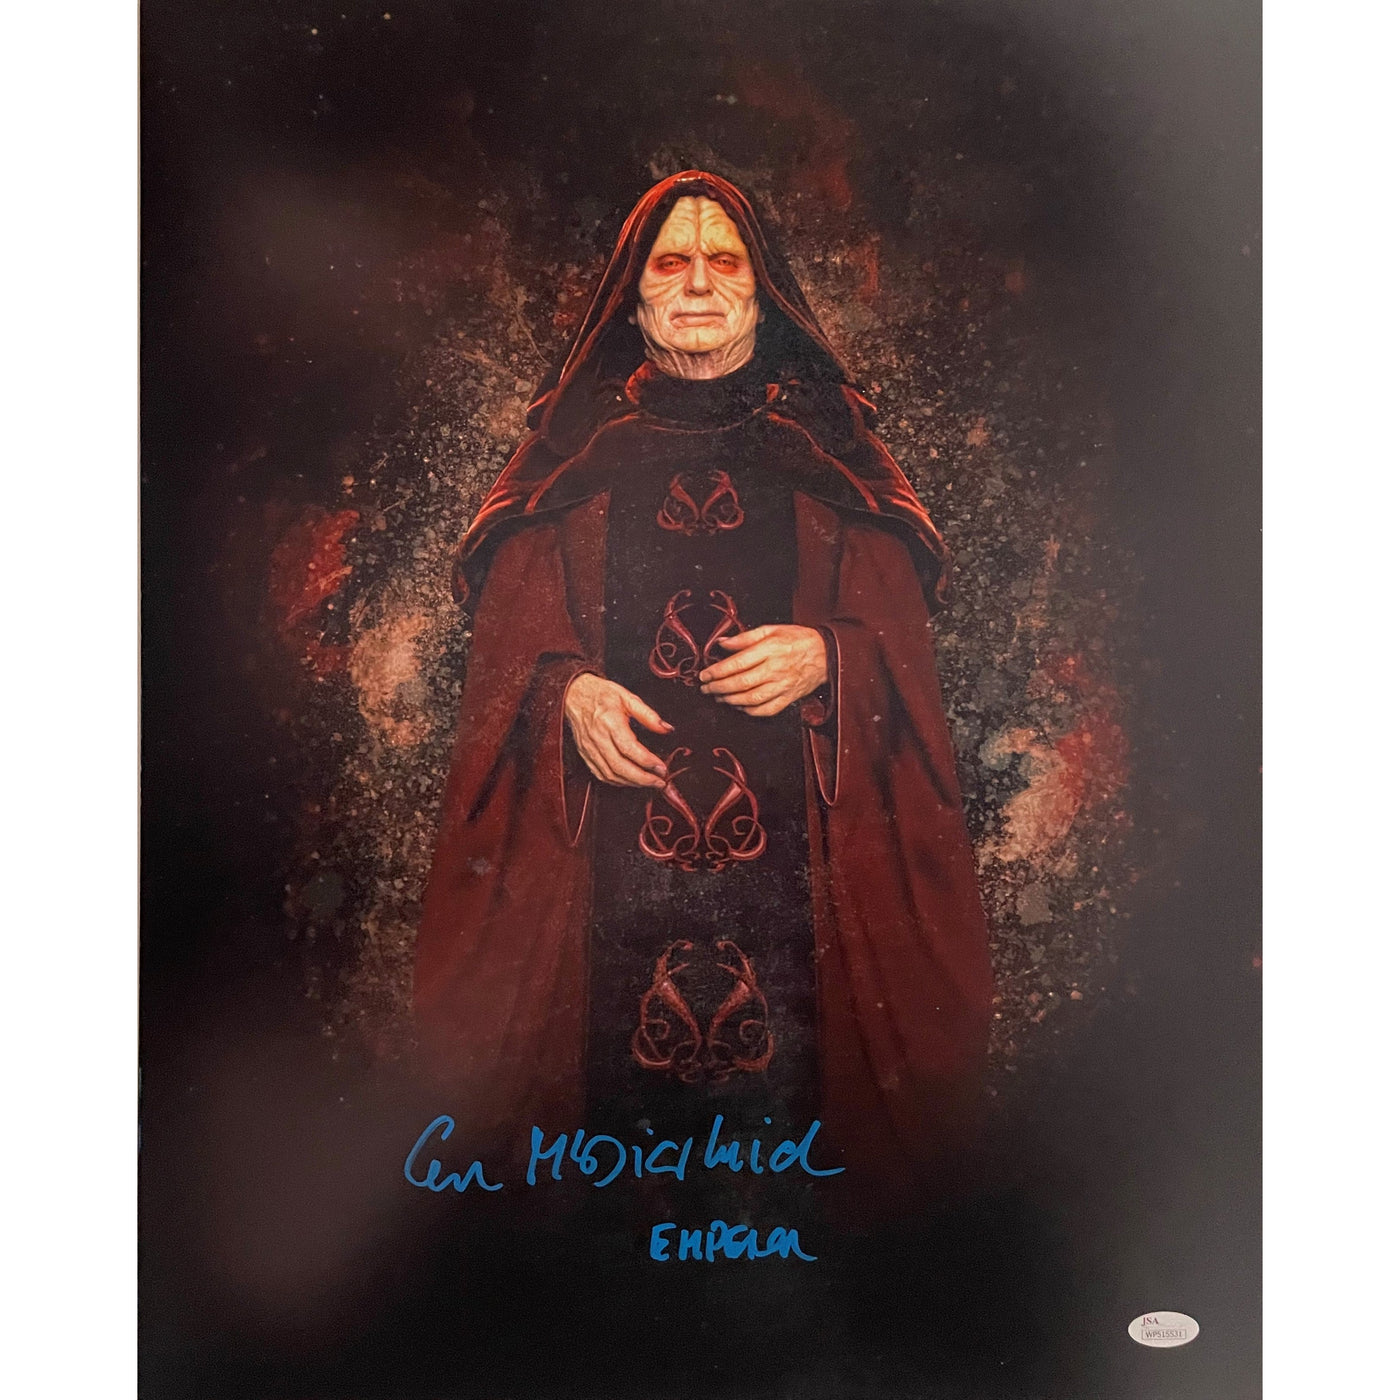 Ian Mcdiarmid Signed 16x20 Photo Star Wars Emperor Autographed JSA COA 11